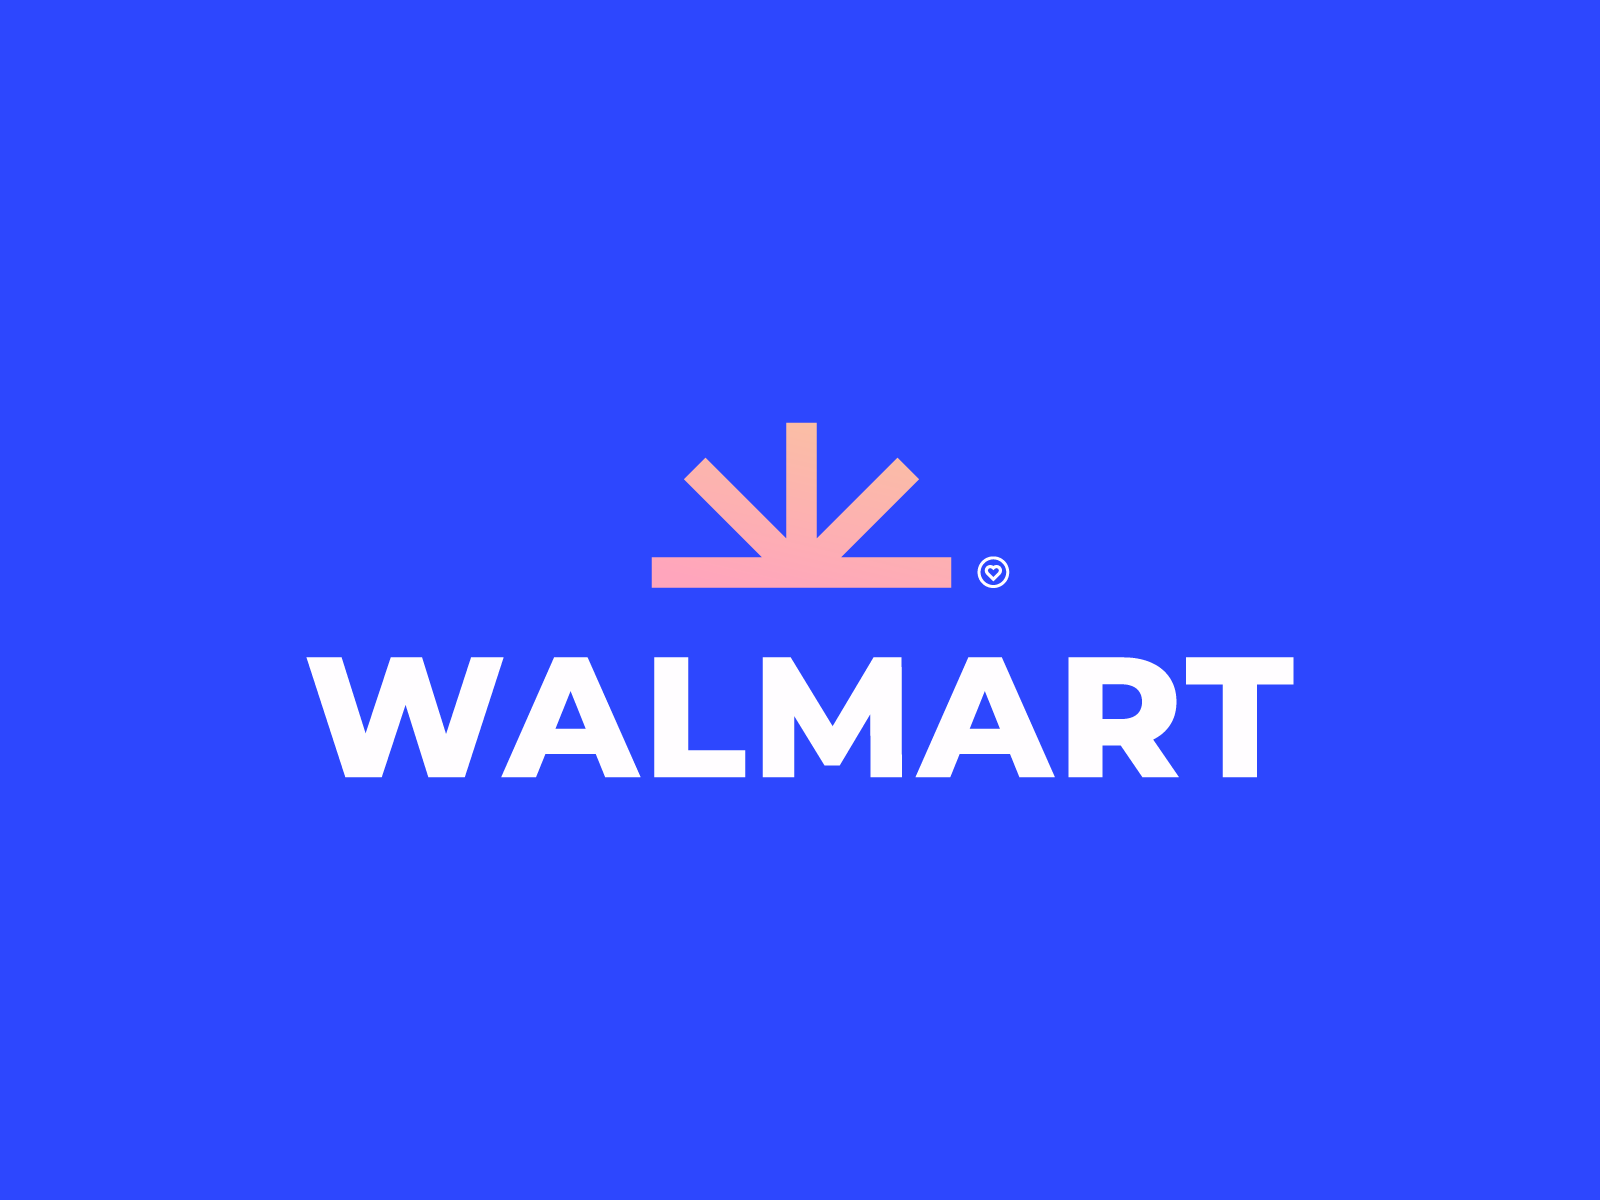 What Is Walmart's Logo